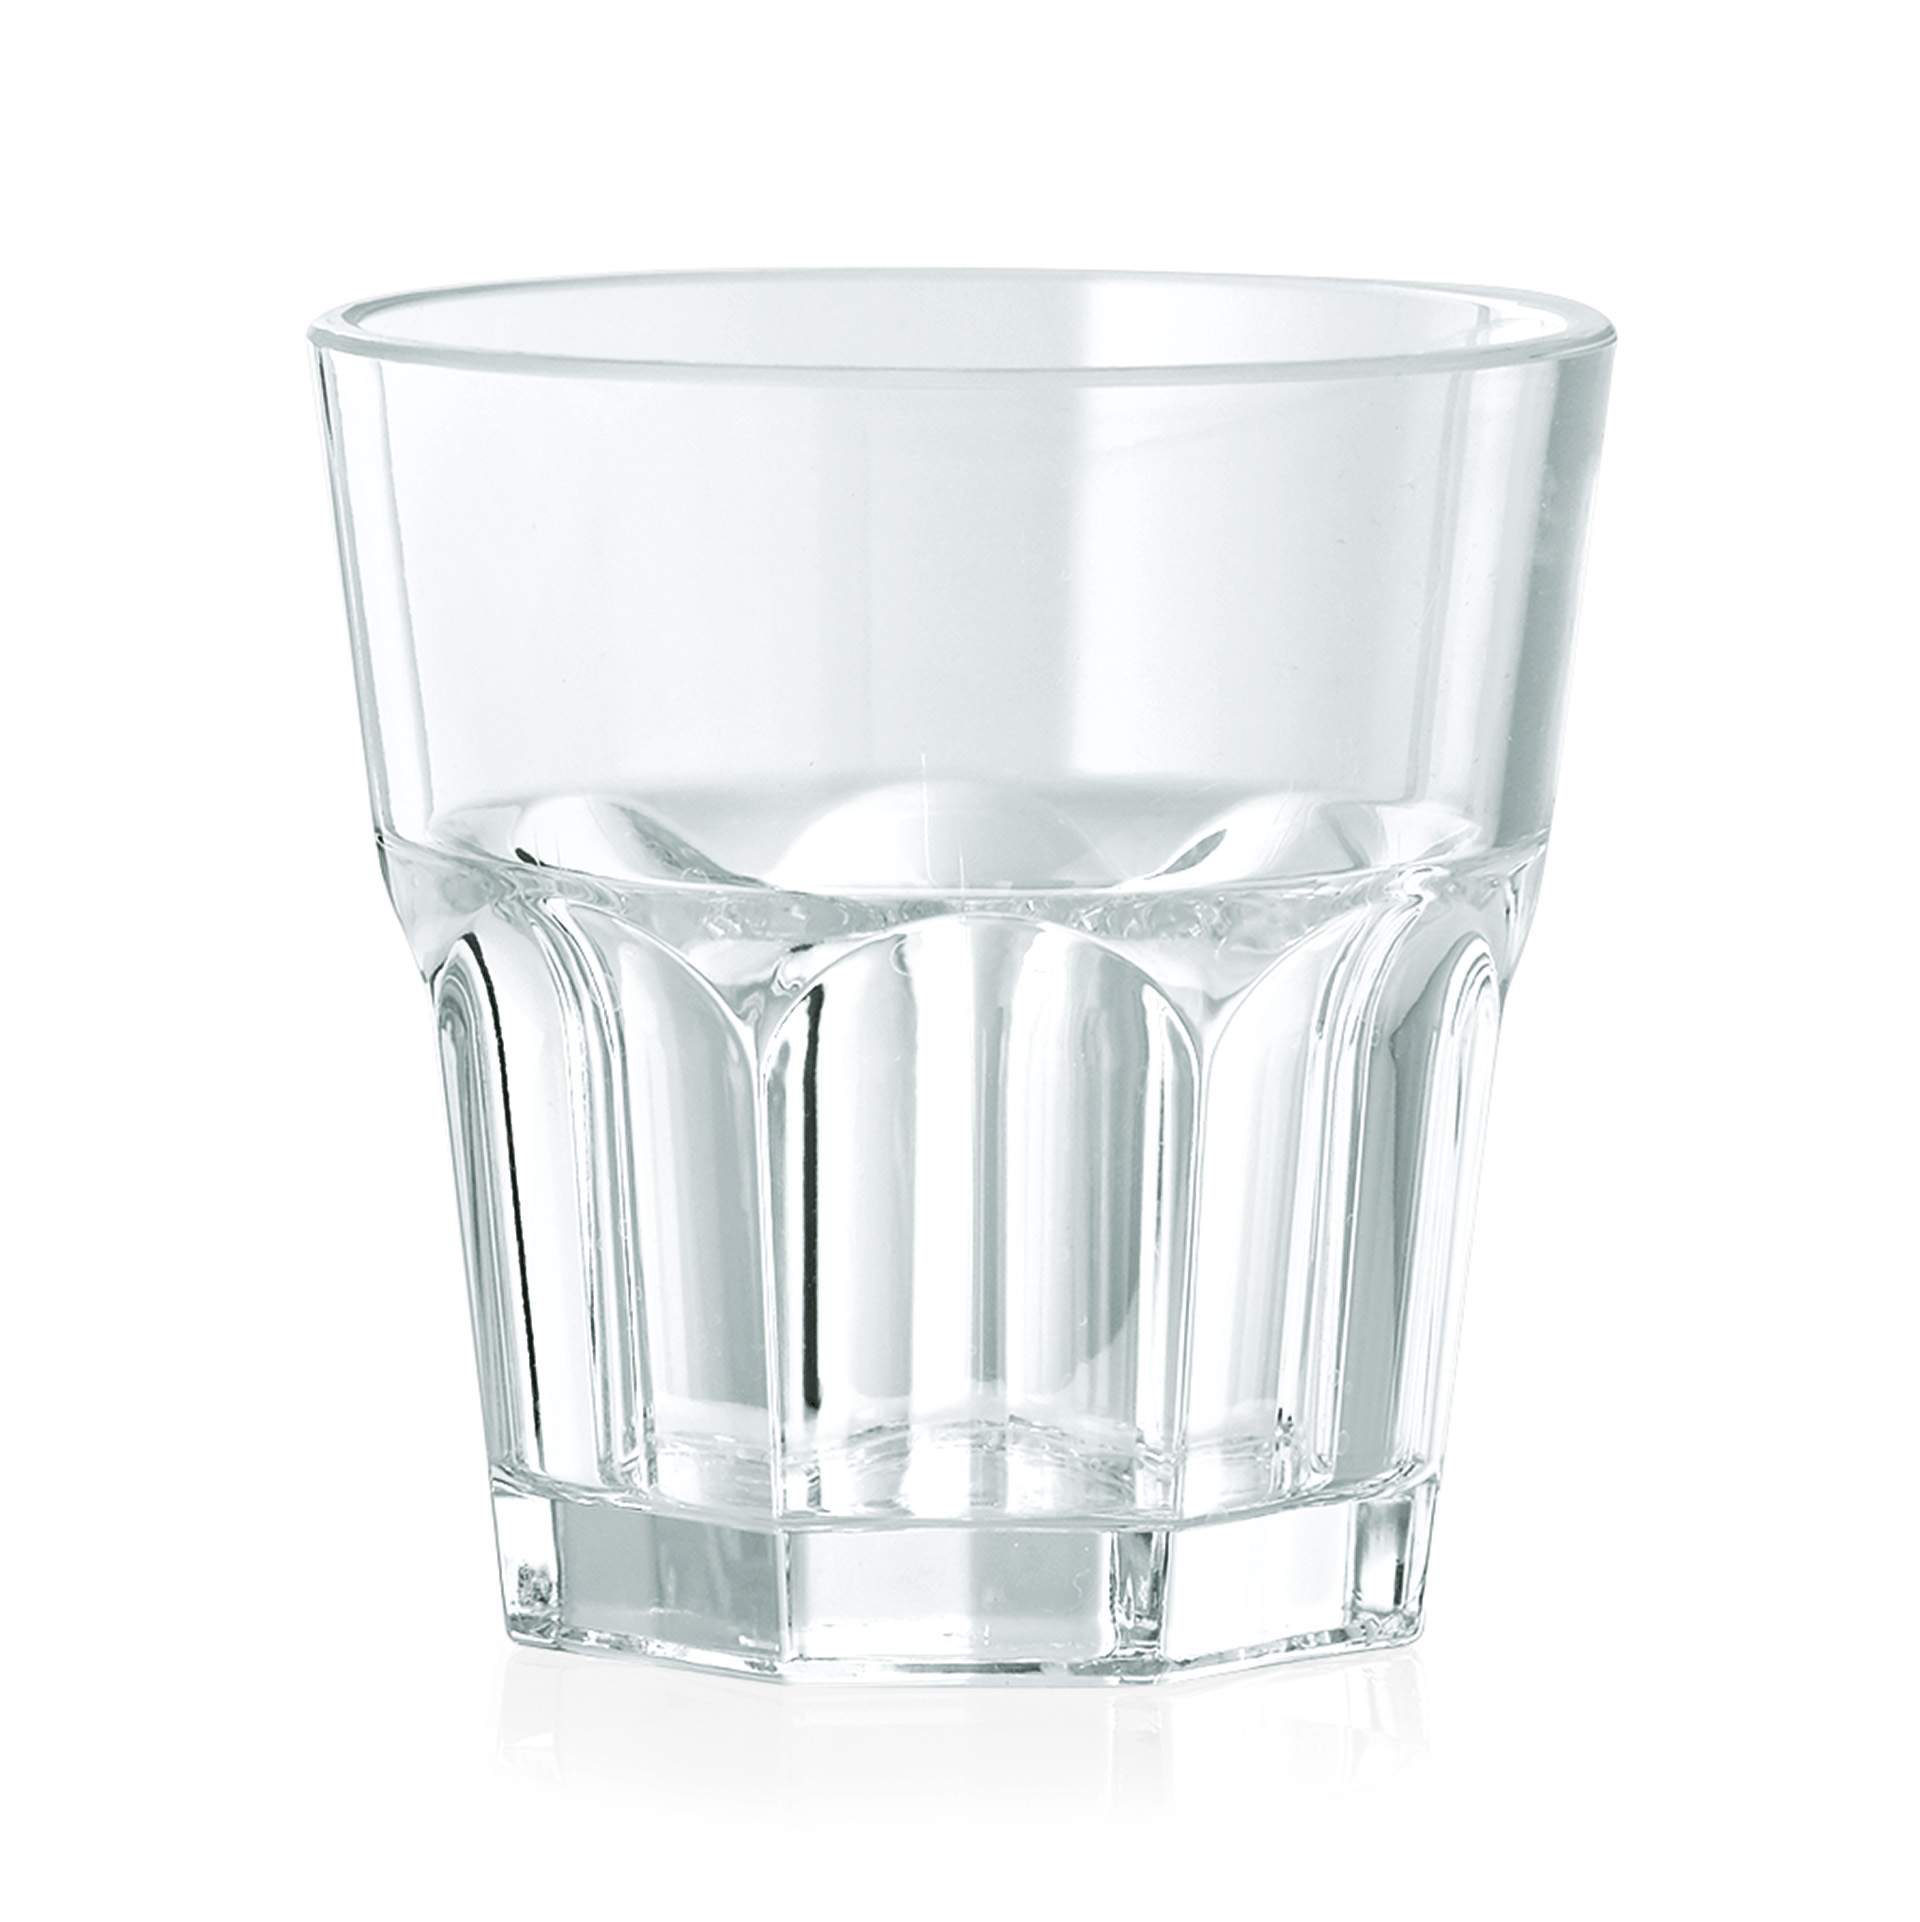 Whiskey-Glas - Serie Pool - Abm. 7,4 cm - Ø oben / unten 7,3 / 5,7 cm - Inhalt 0,17 l - Polycarbonat - premium Qualität - 9450017-A